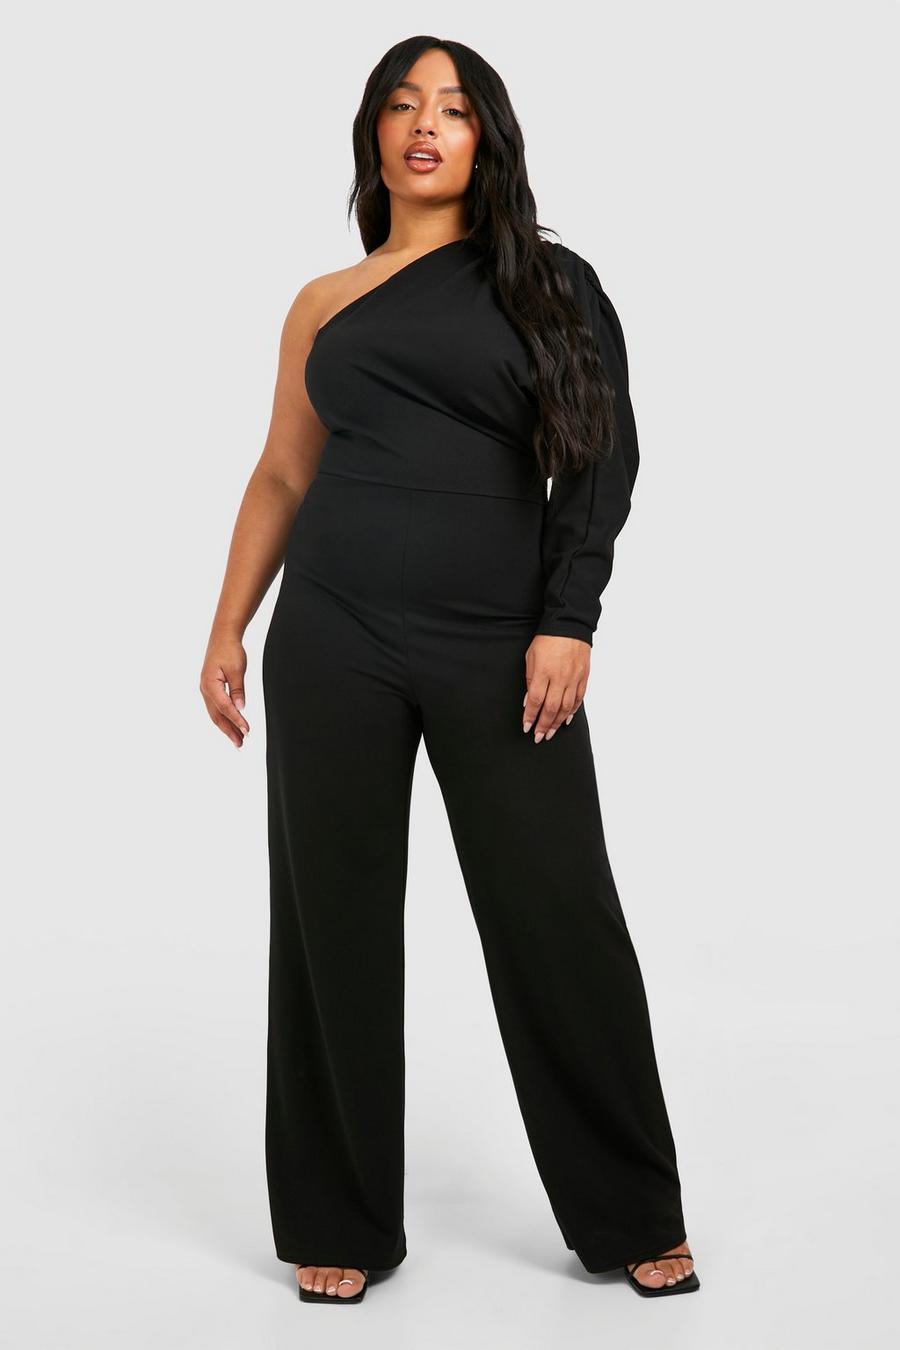 SELONE Plus Size Jumpsuits for Women Plus Size Suspender Loose Fit